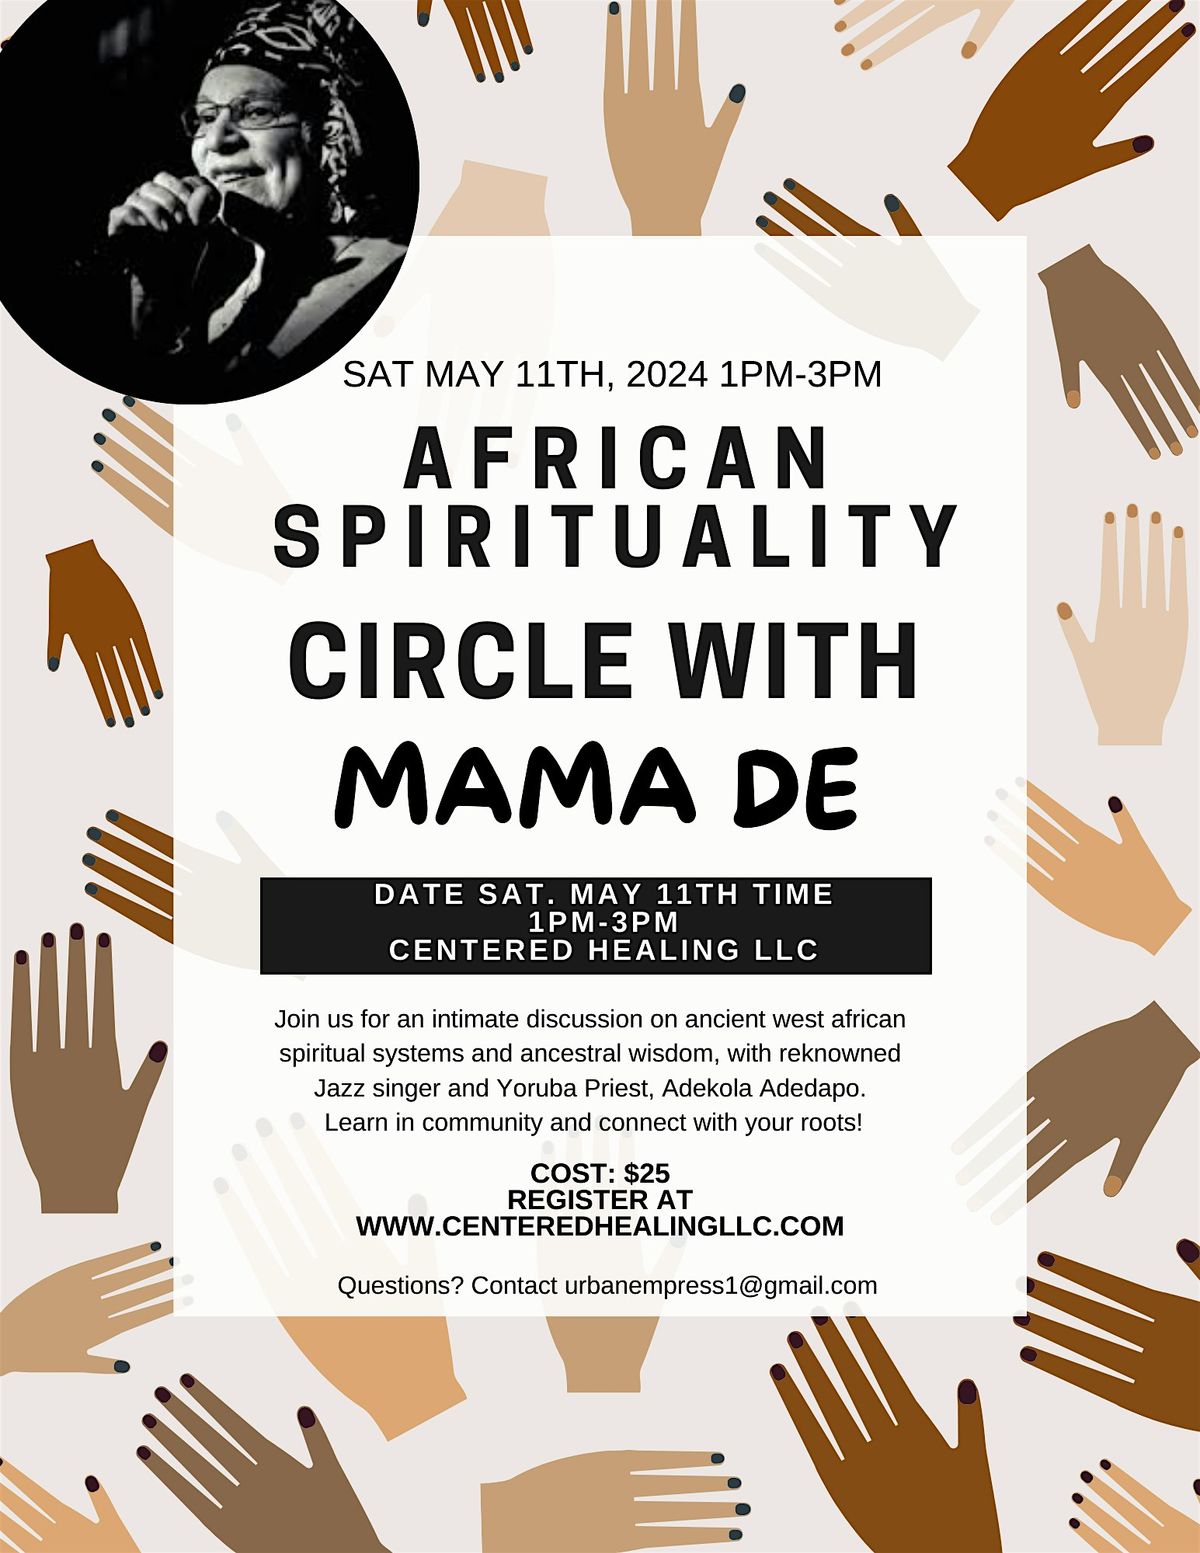 African Spirituality Circle with MAMA DE